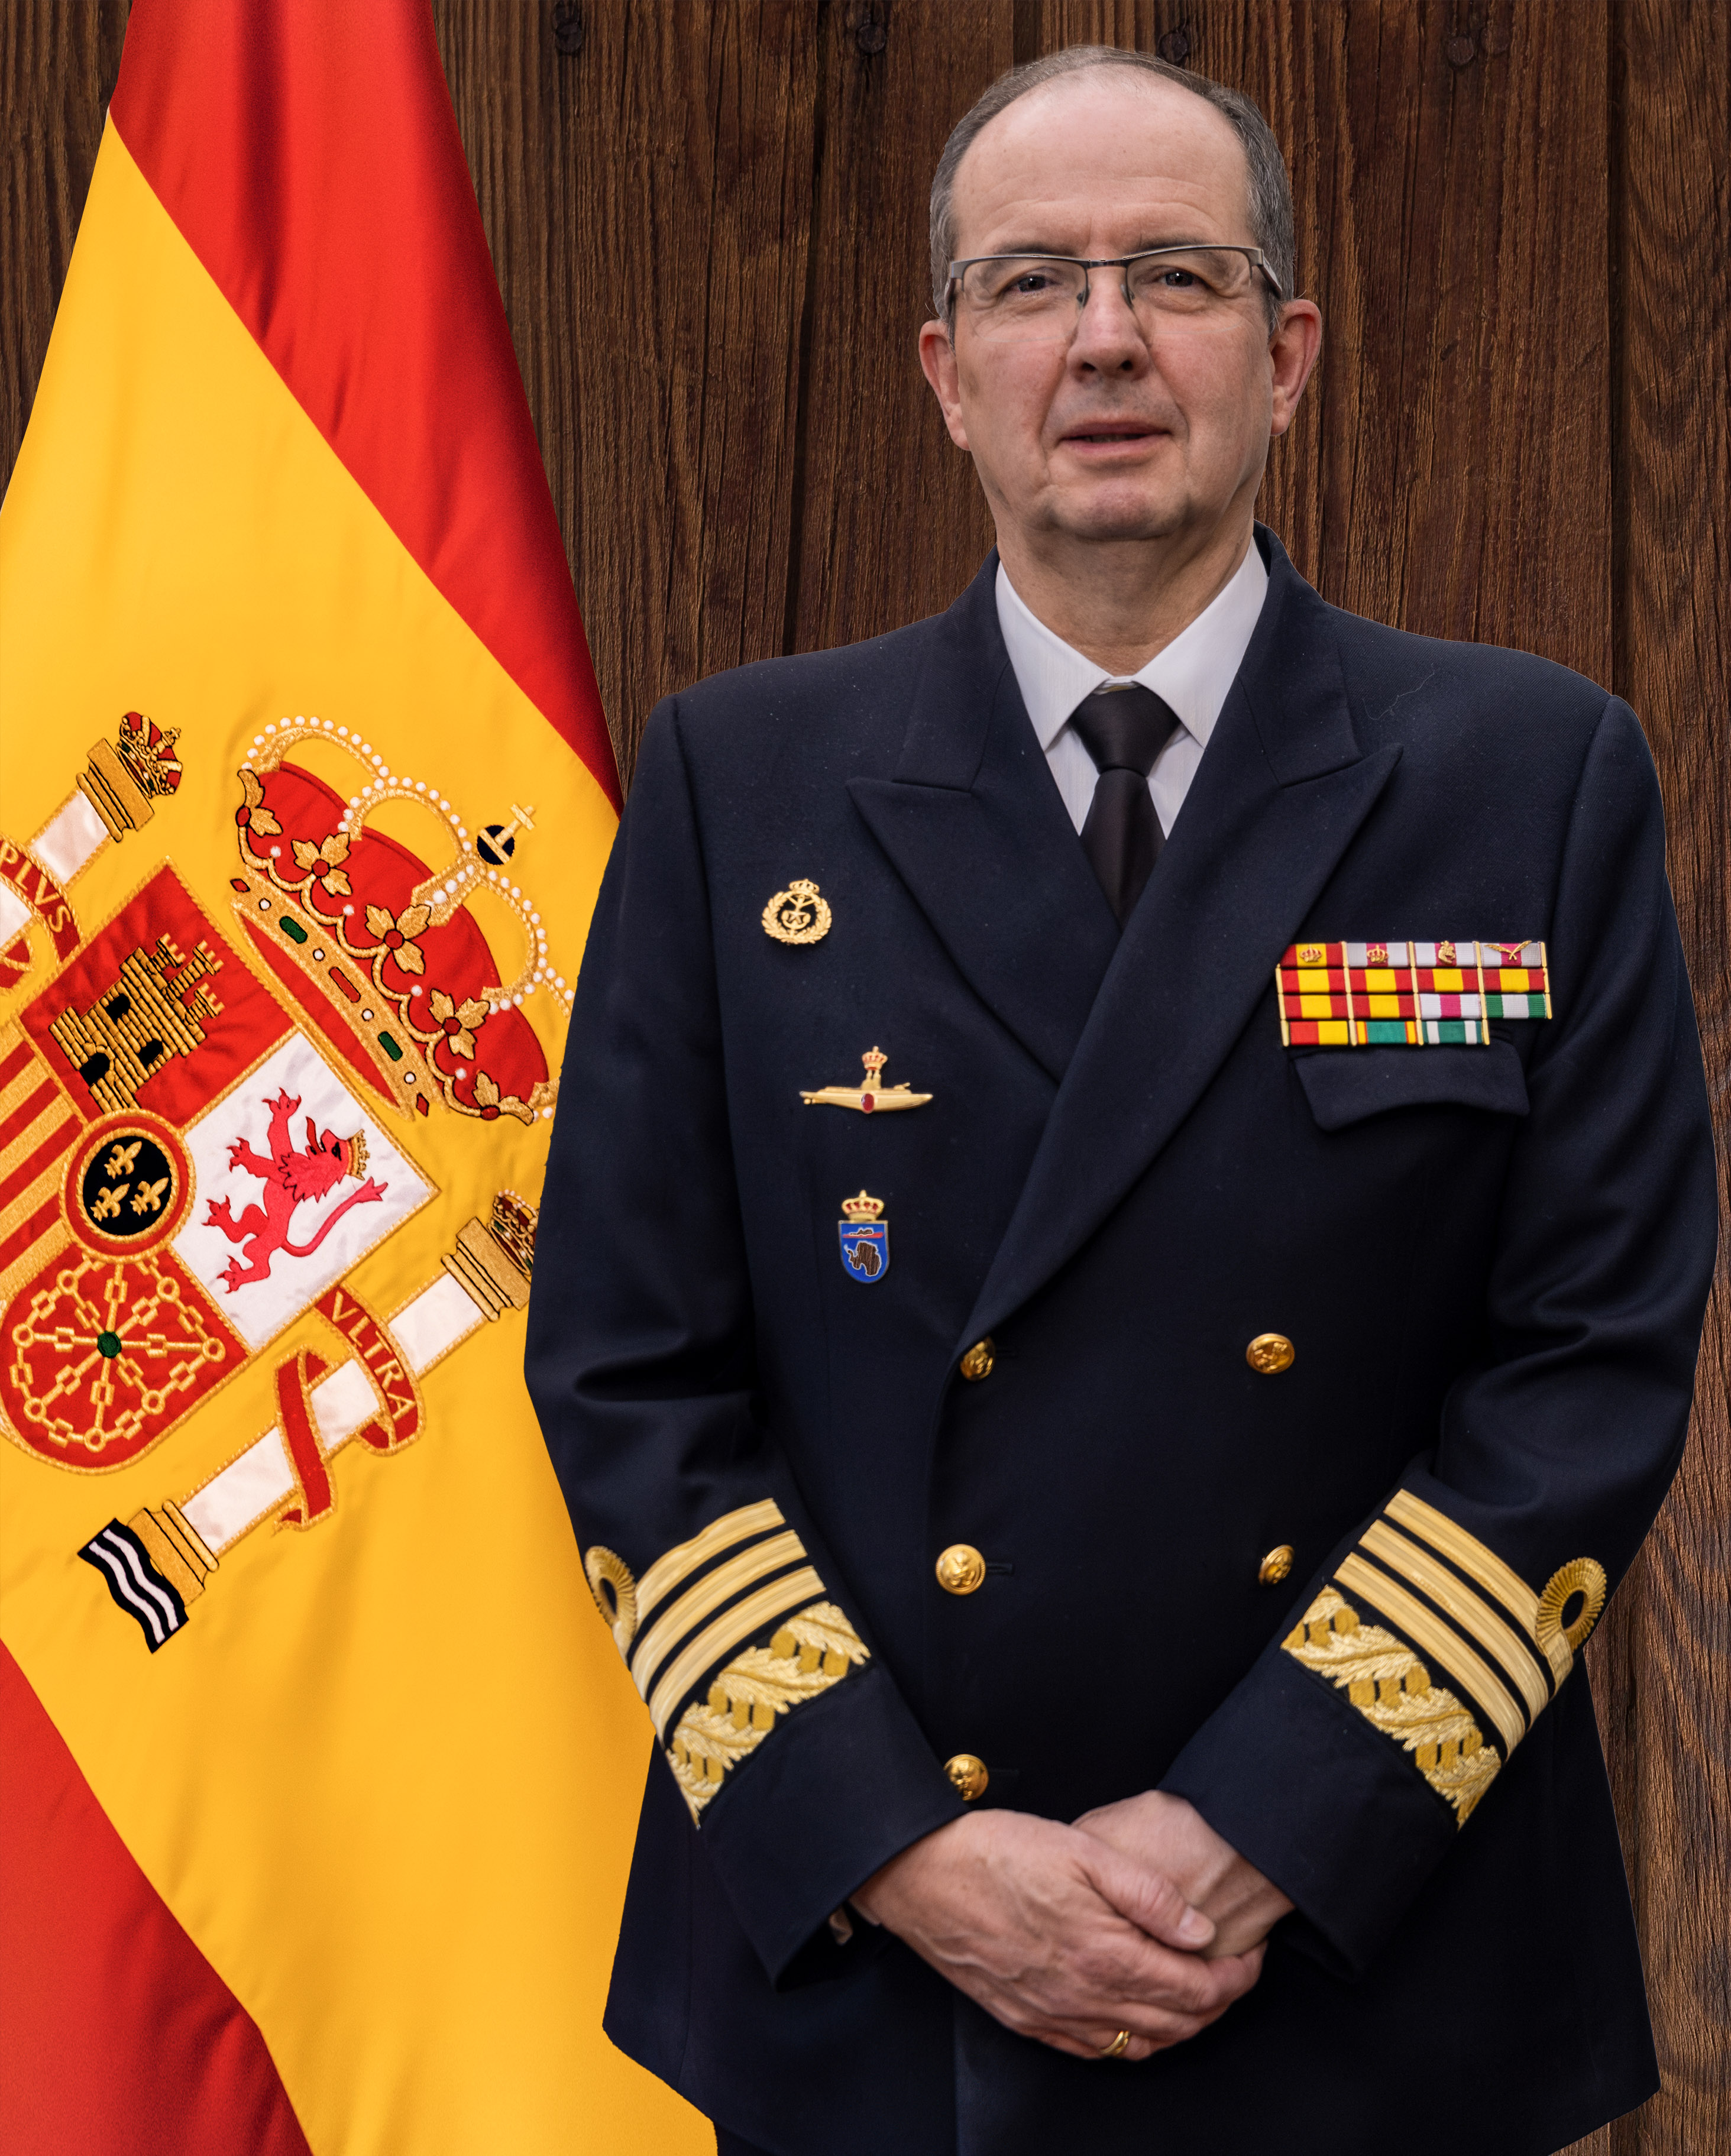 Admiral D. Gonzalo Sanz Alisedo